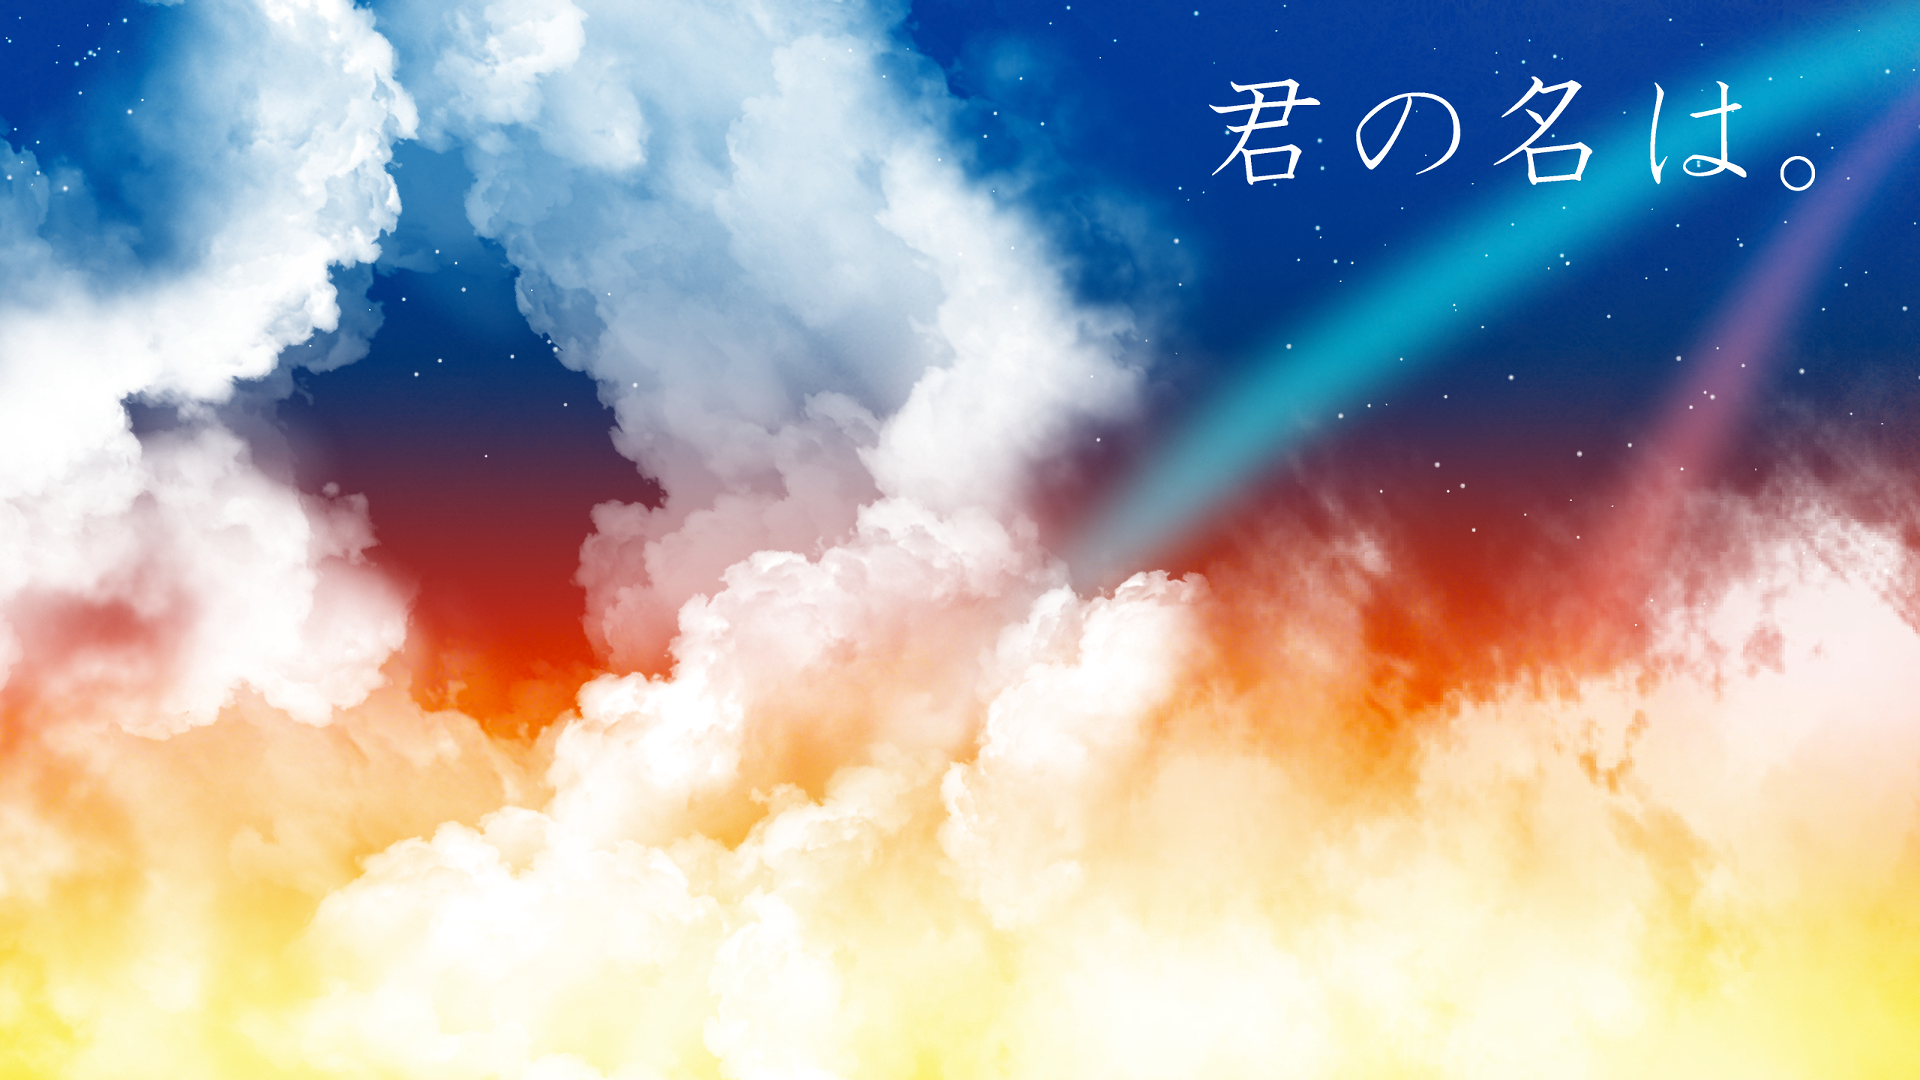 Na Wa Makoto Shinkai Background - HD Wallpaper 